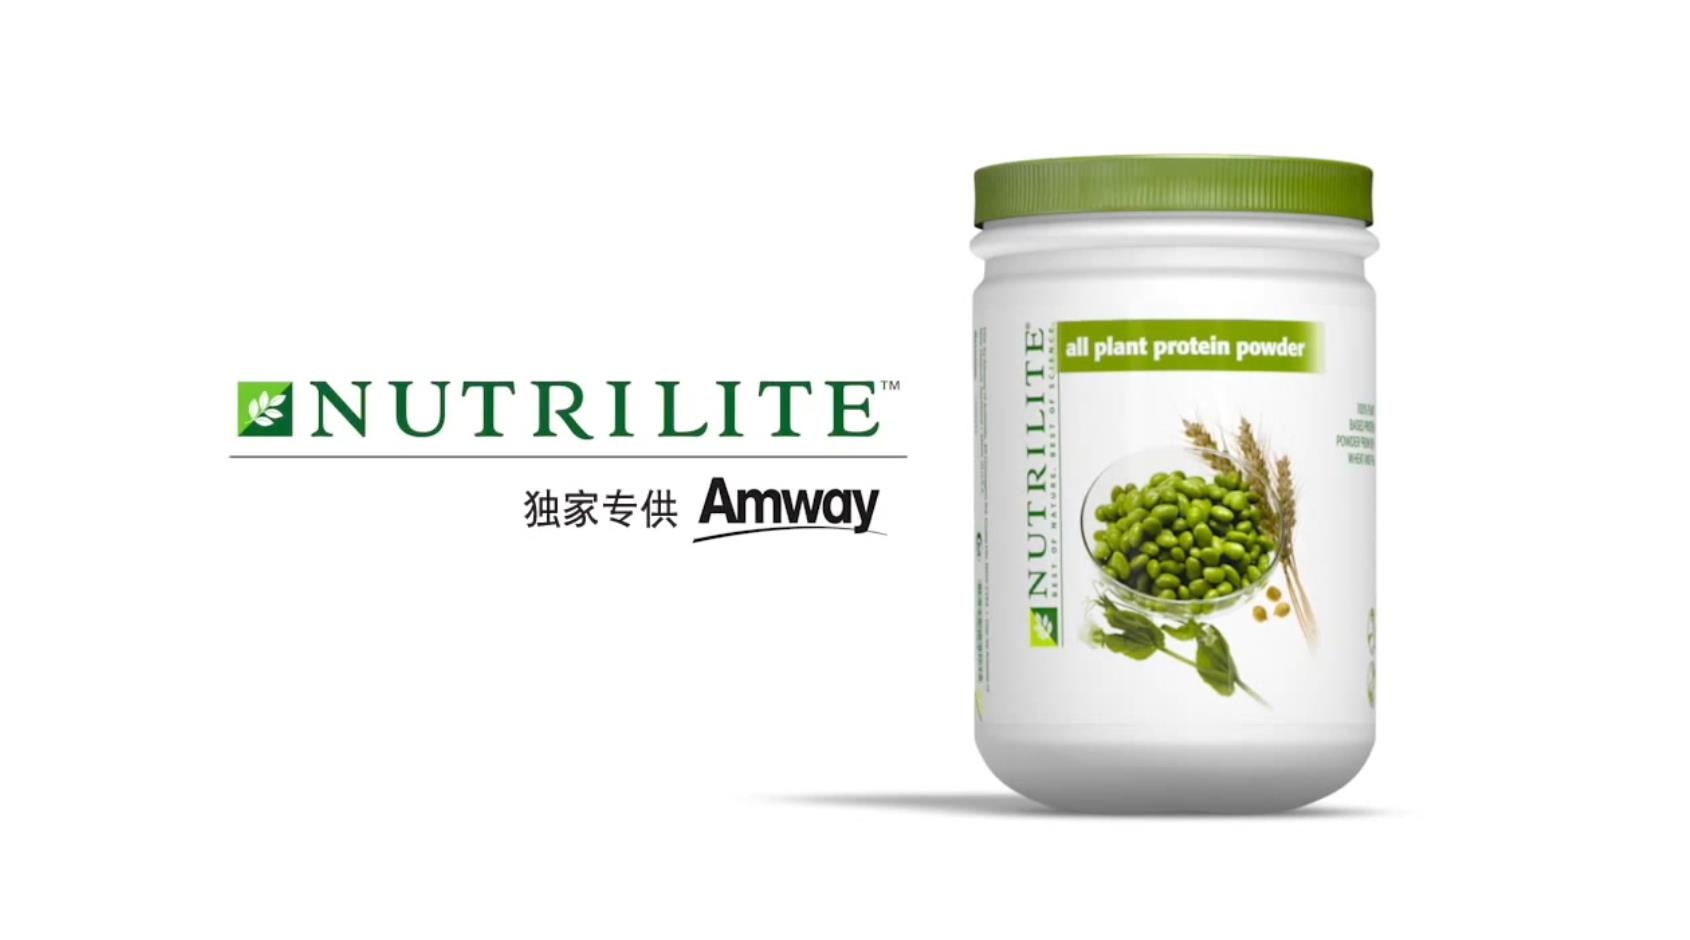 「Amway」Nutrilite优质蛋白素-中文广告